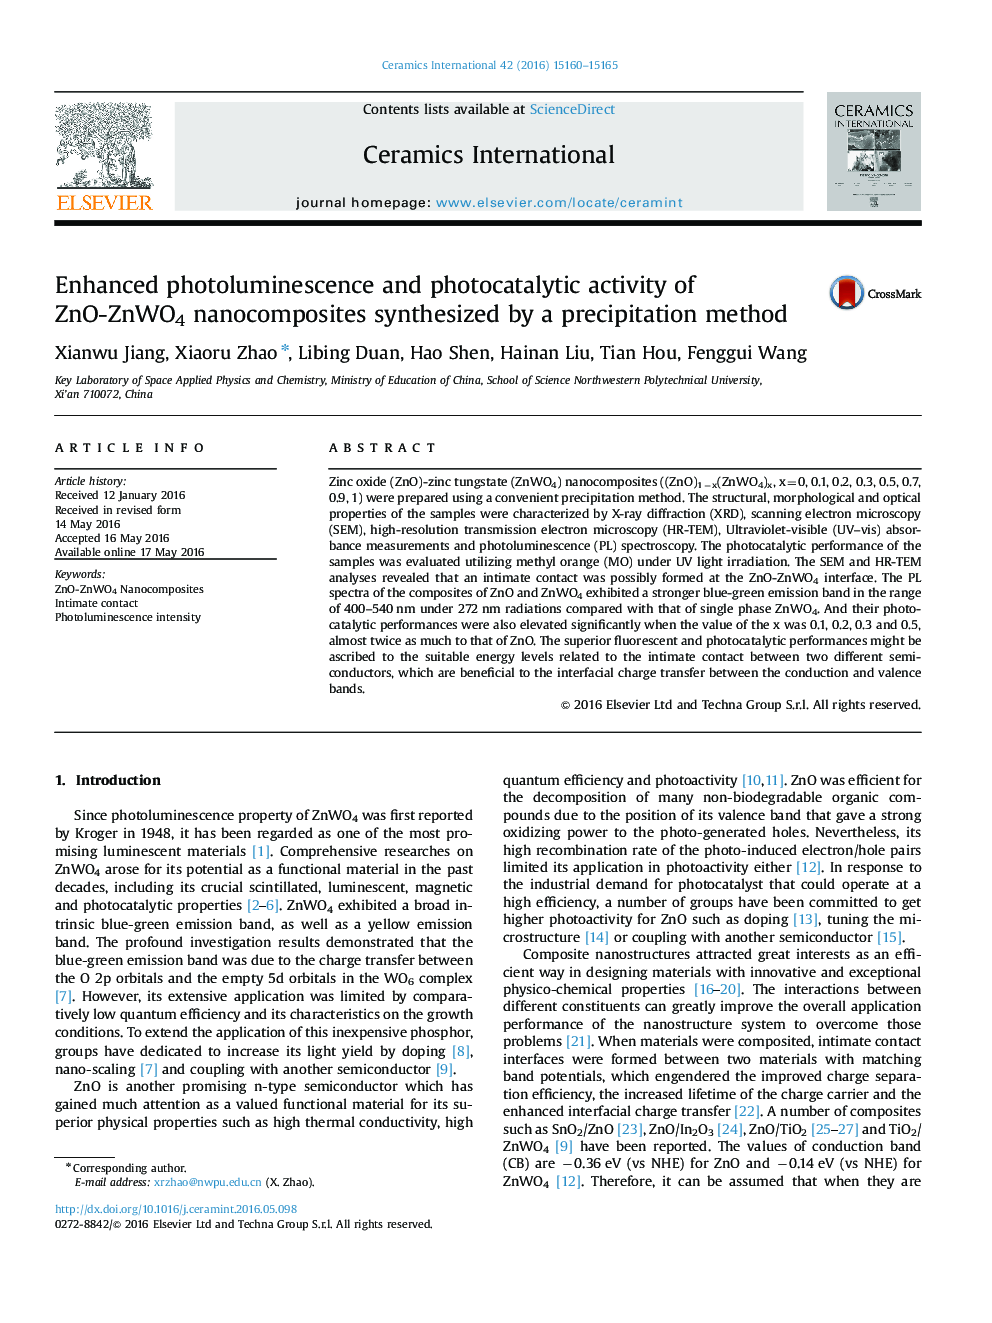 Enhanced photoluminescence and photocatalytic activity of ZnO-ZnWO4 nanocomposites synthesized by a precipitation method